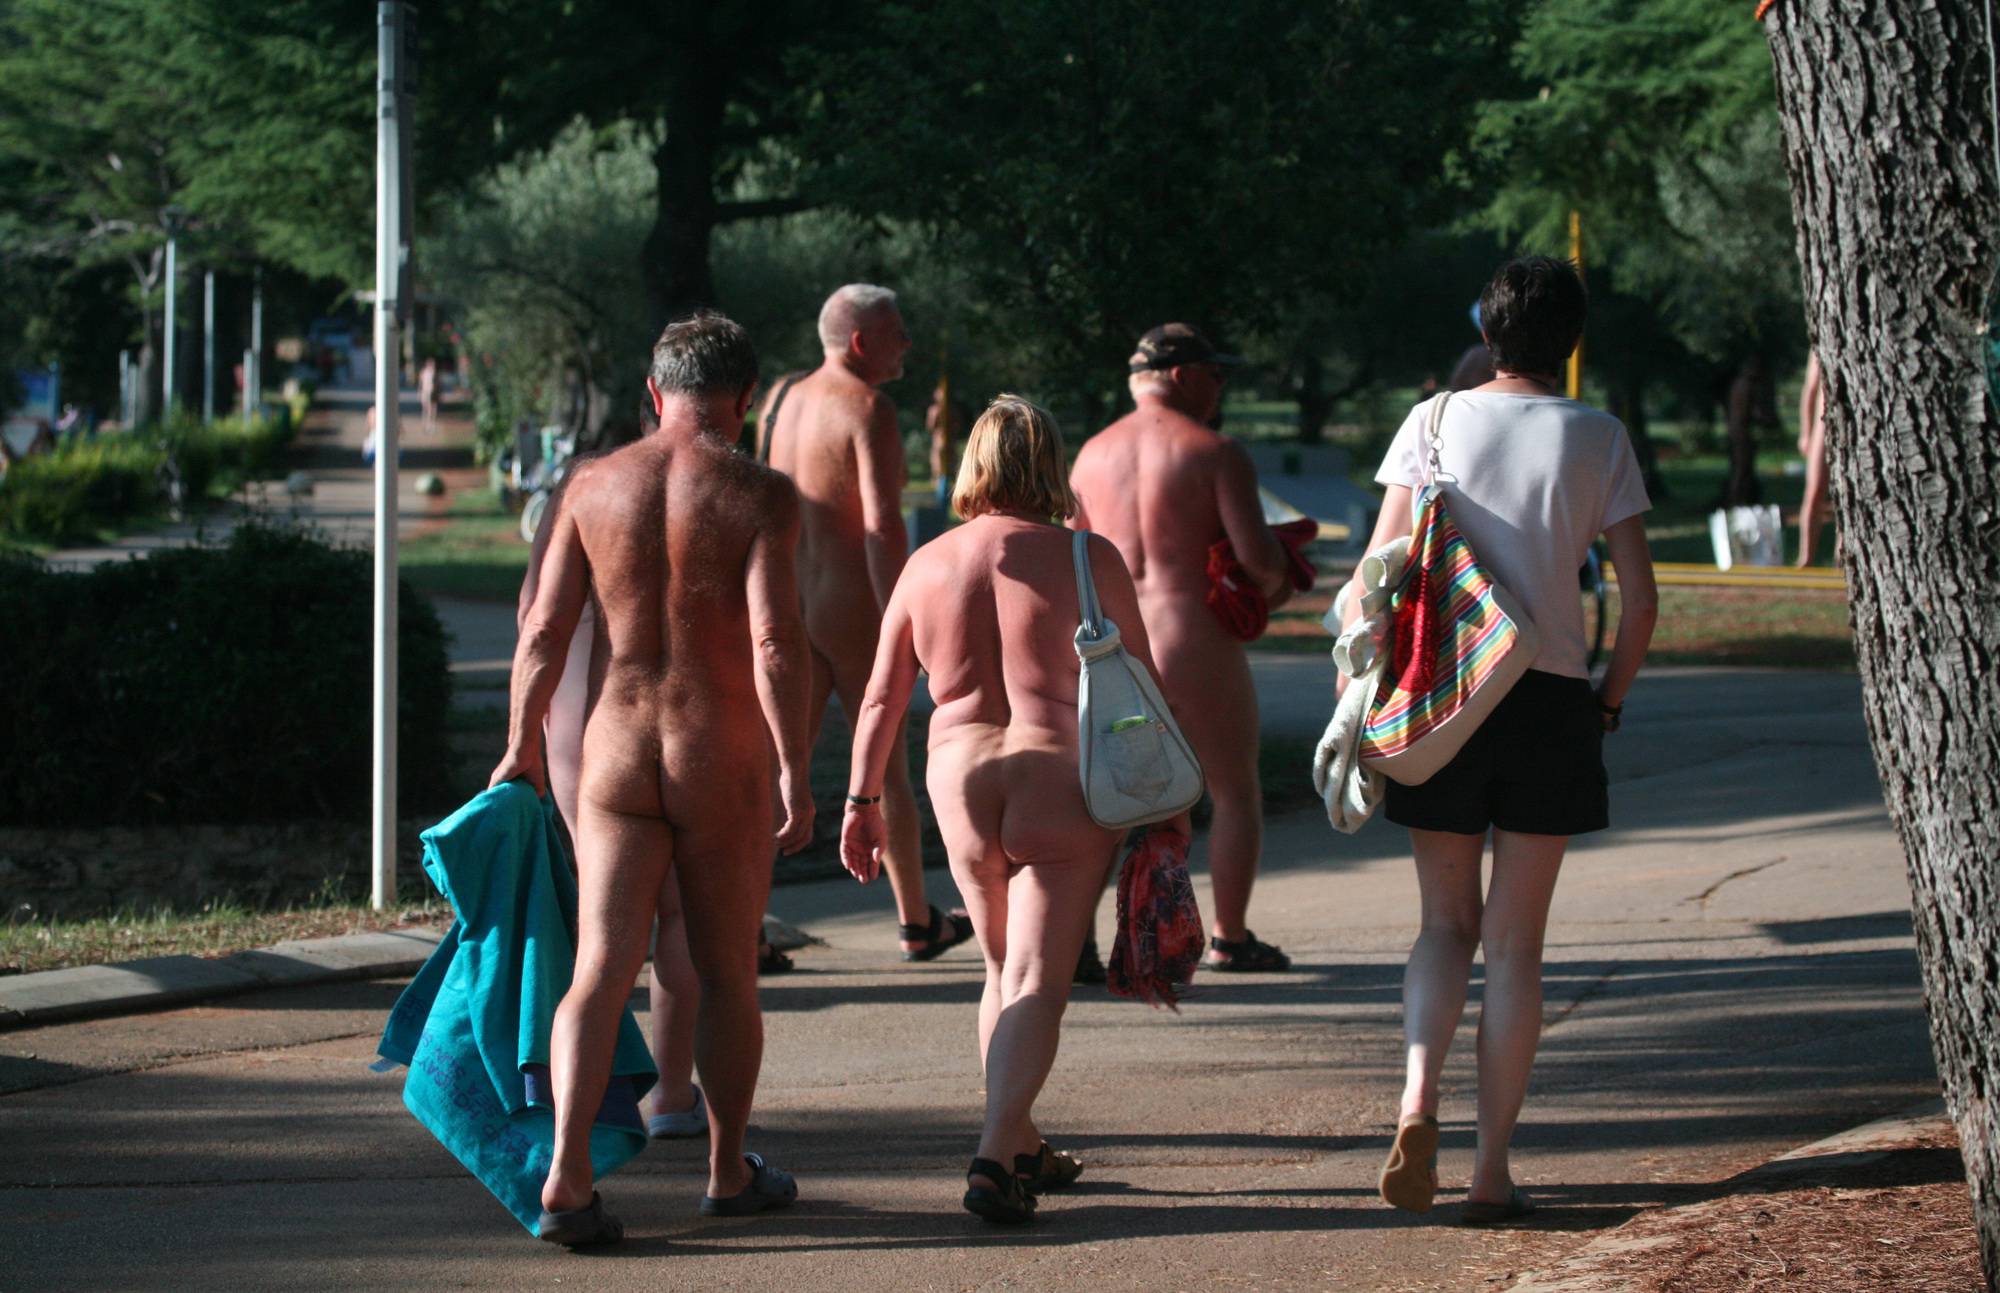 Nudist Park Sidewalk Shot - 4